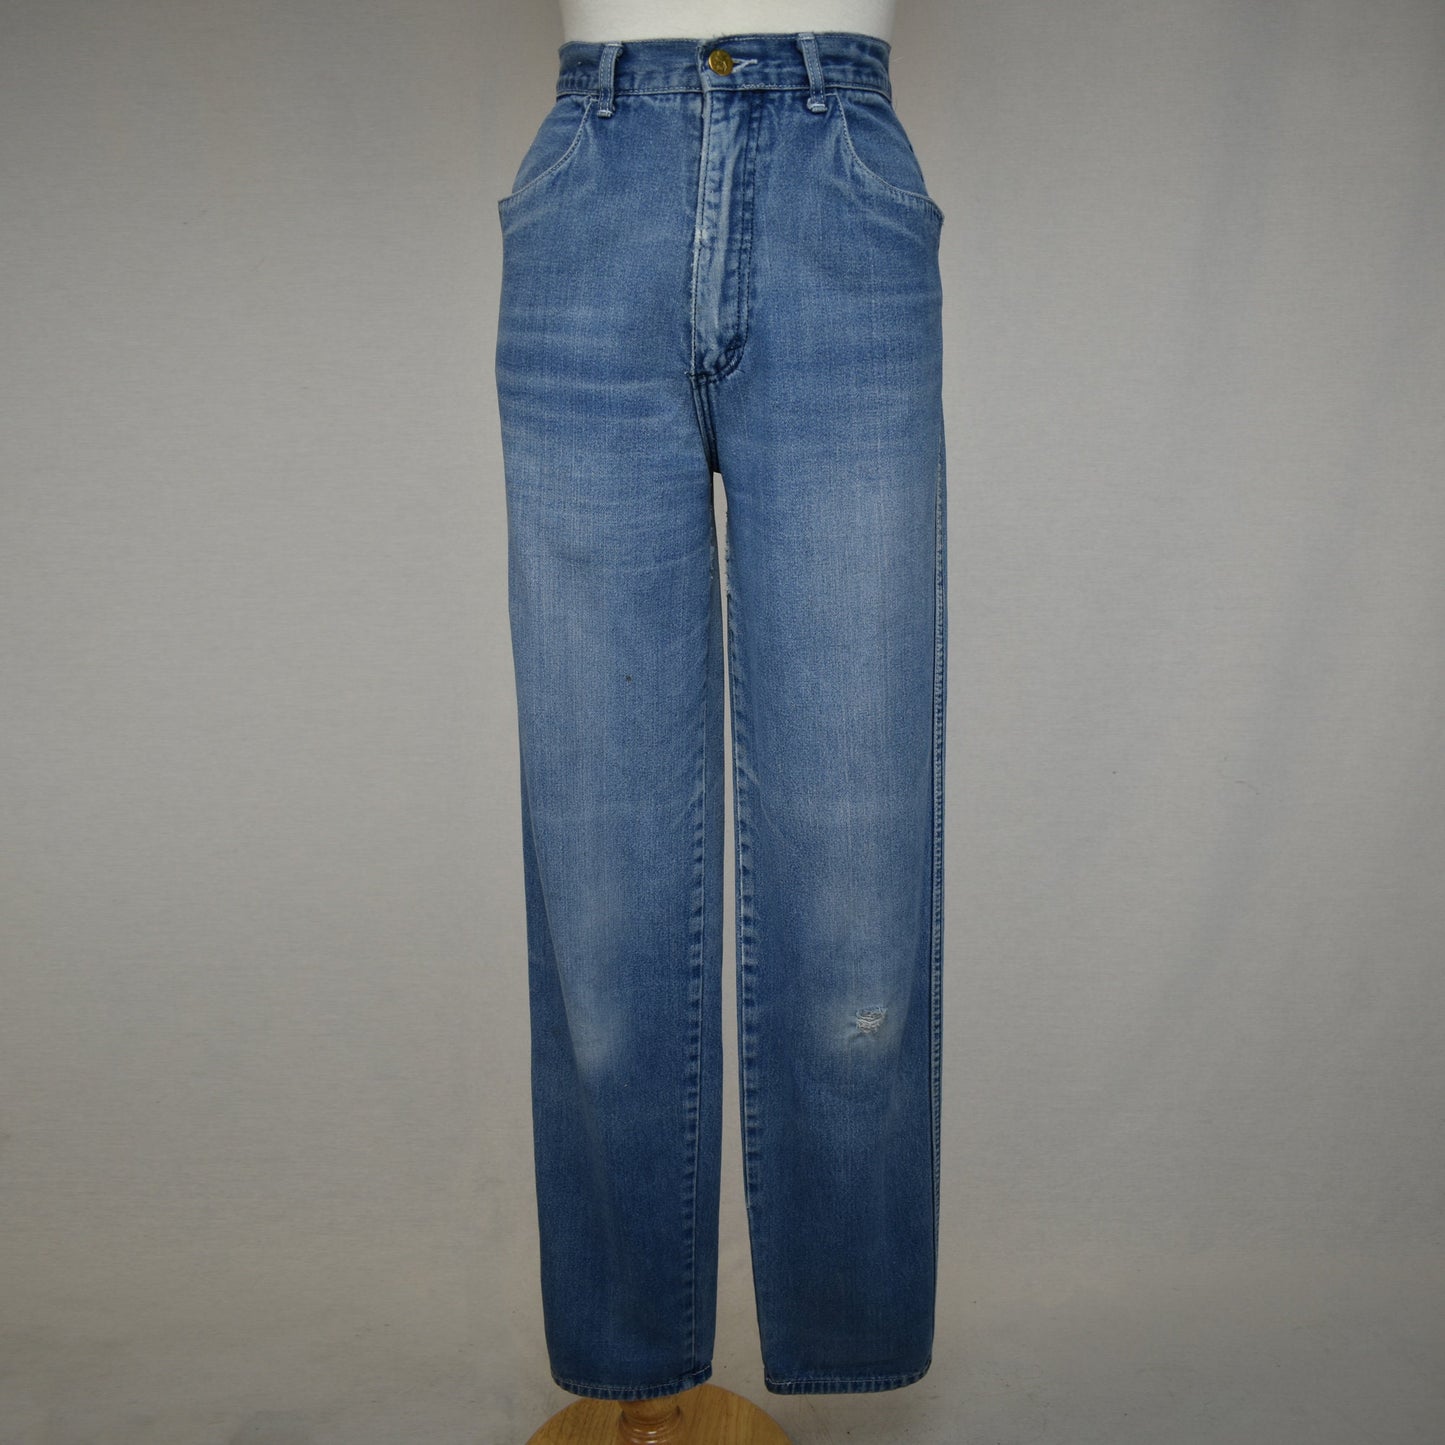 Vintage Normandee Rose Jeans - 80s Straight Leg - High Waist